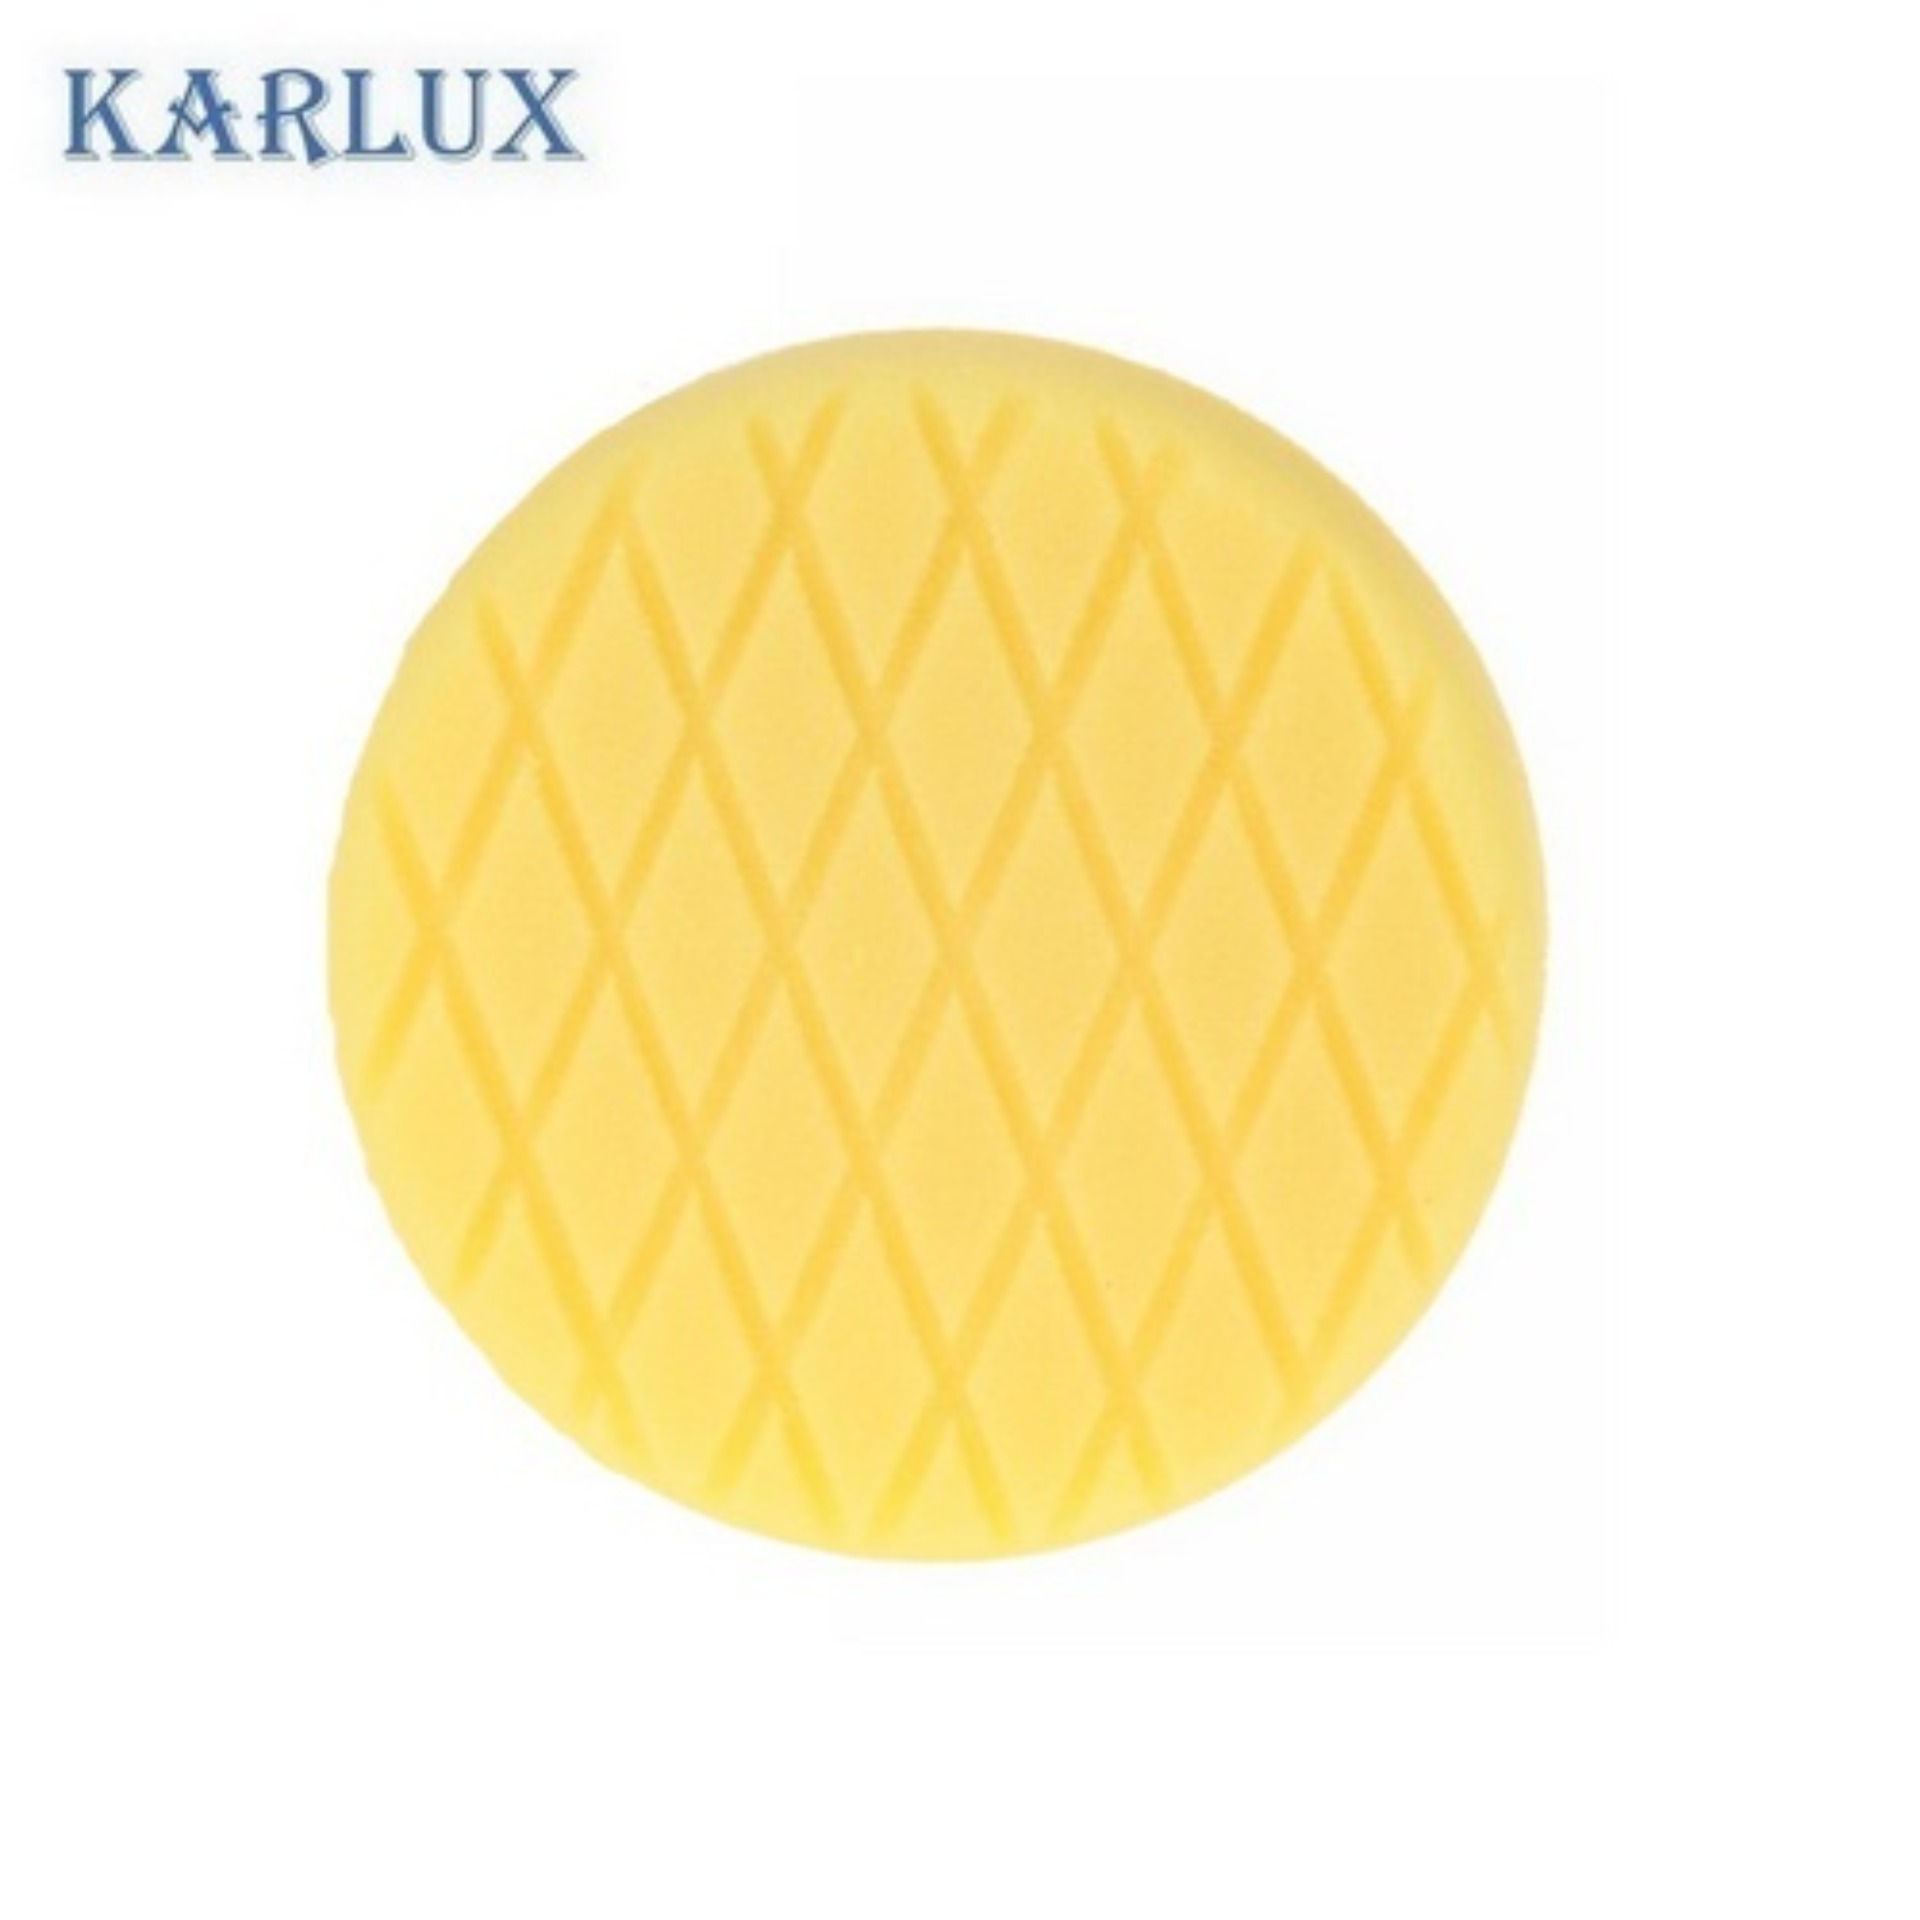 Karlux ฟองน้ำขัดสีรถ 6นิ้ว สีเหลือง Yellow Medium Cut Diamond Cross Foams 6inch (สำหรับแป้นจับ 5นิ้ว เพื่อเว้นขอบ)